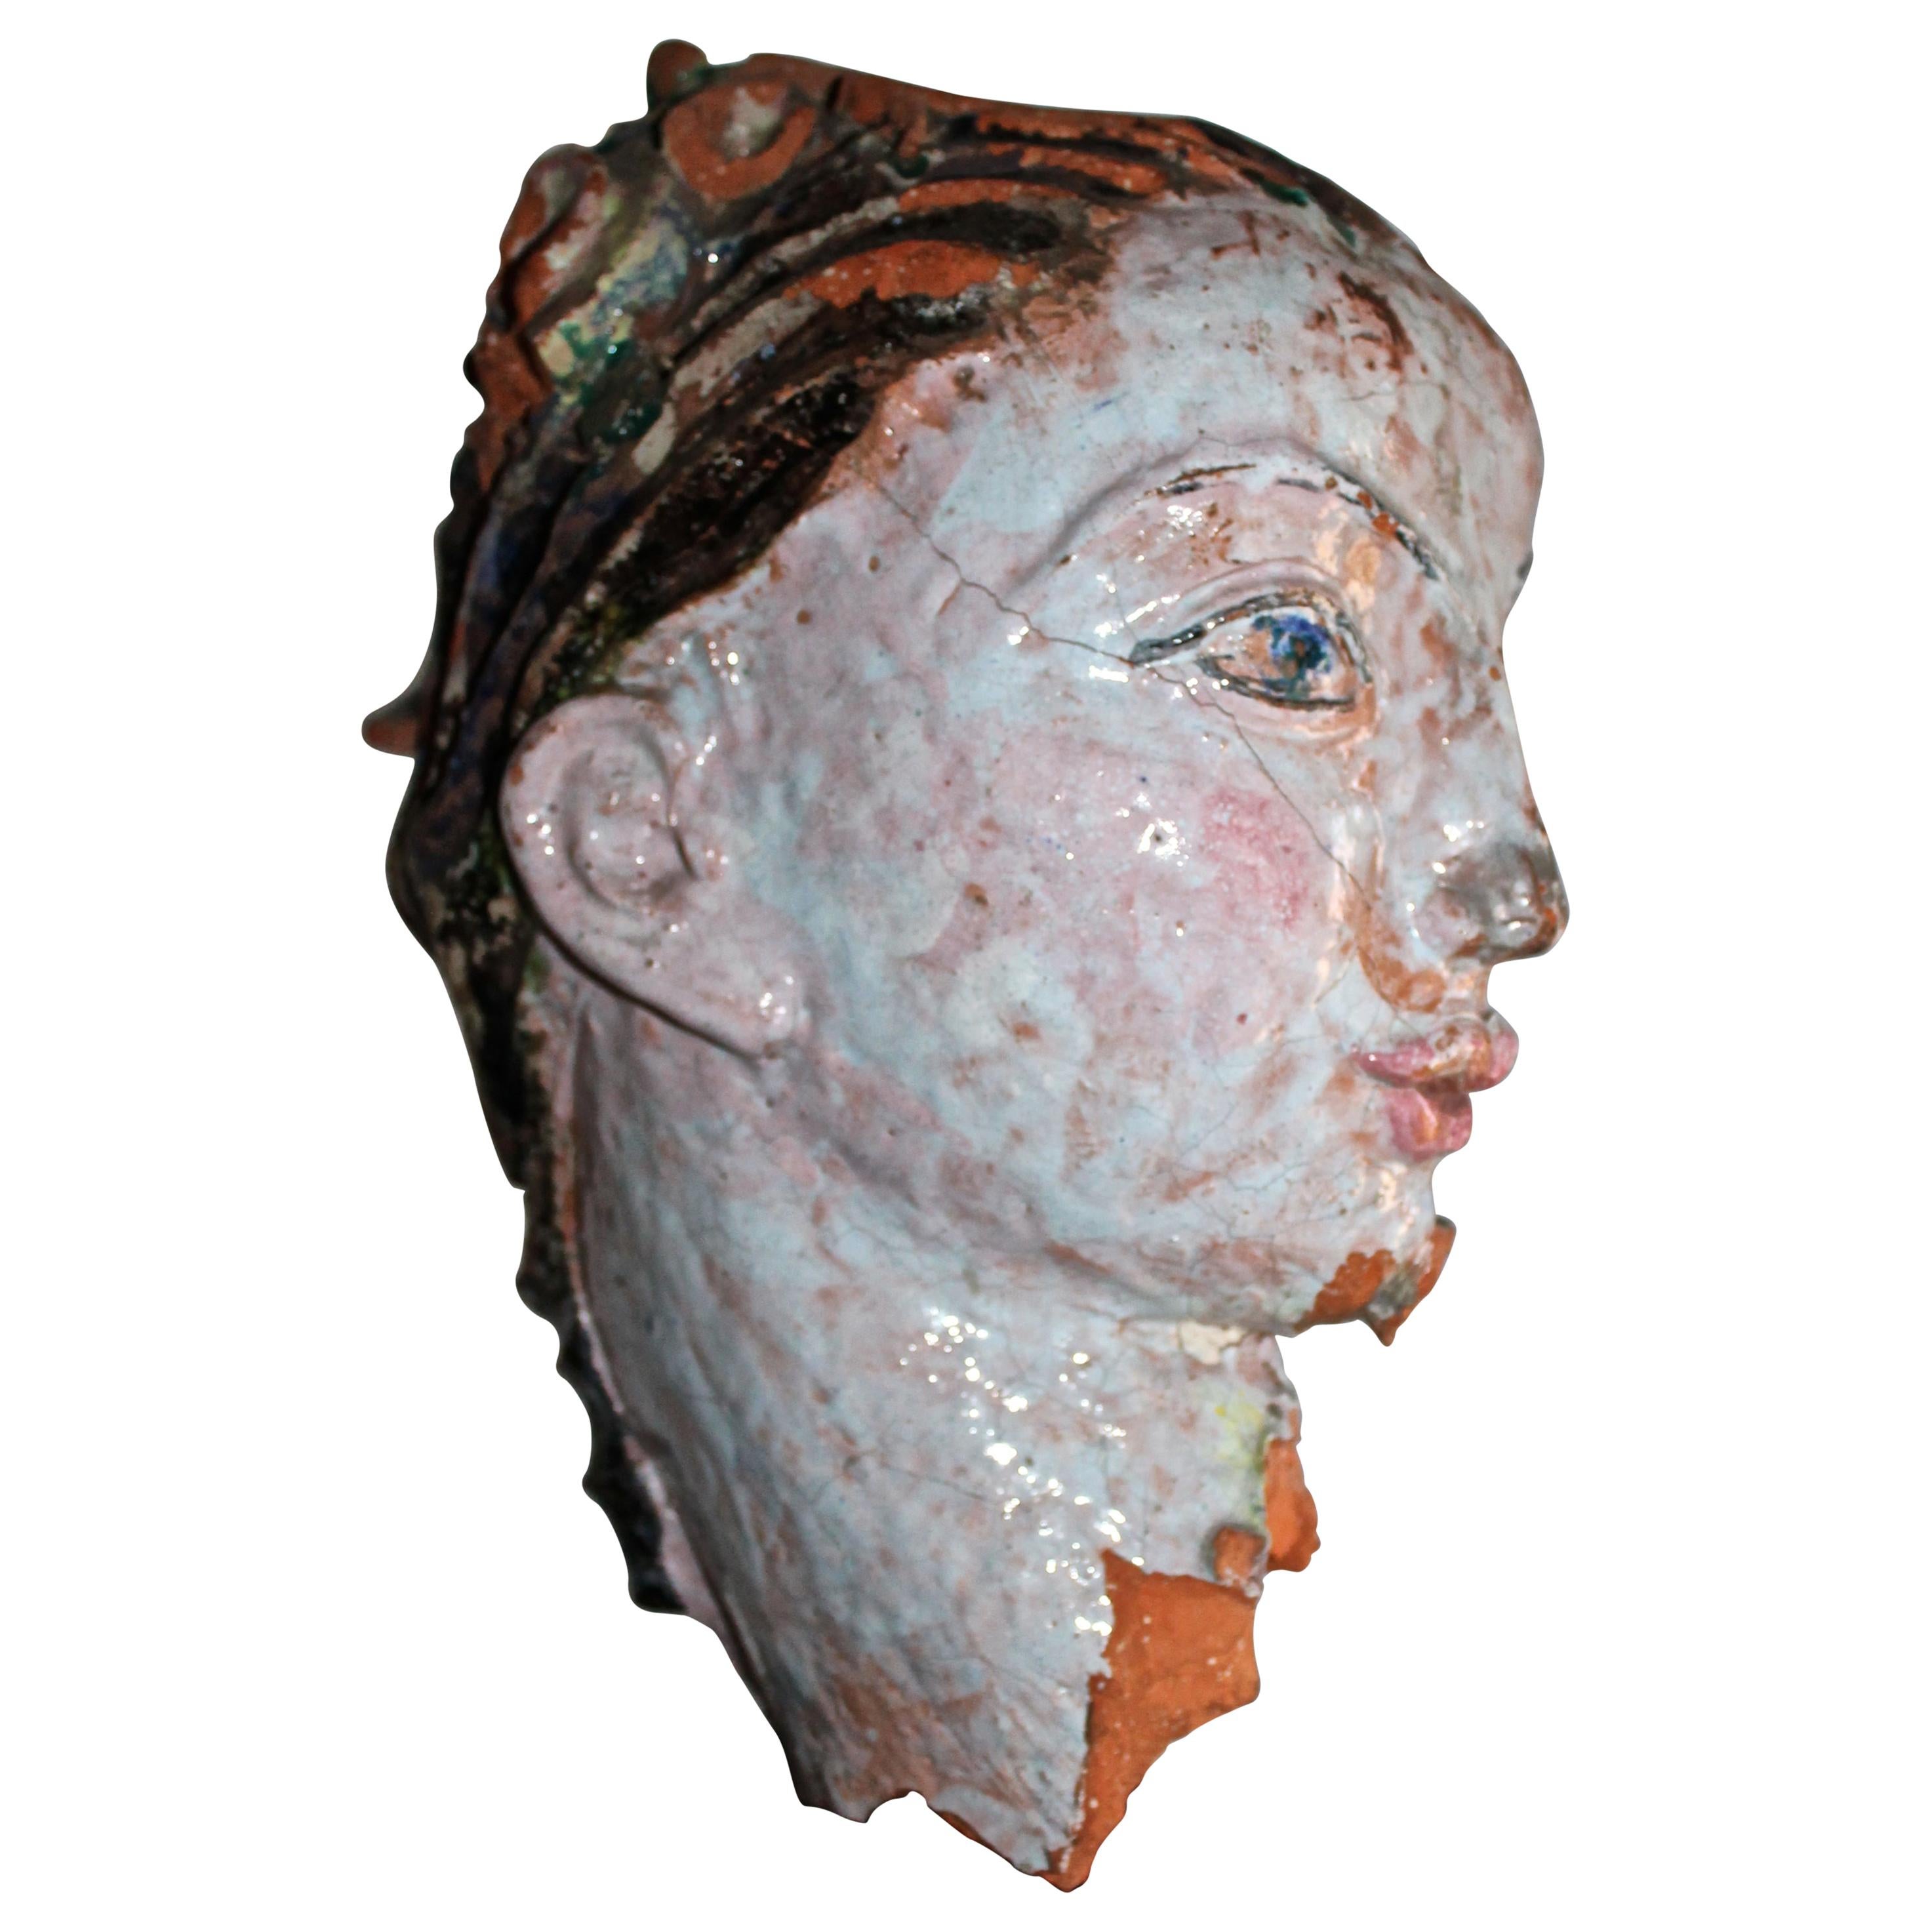 Vally Wieselthier Important Ceramic Head, & Hand from Wiener Werkstätte Showroom